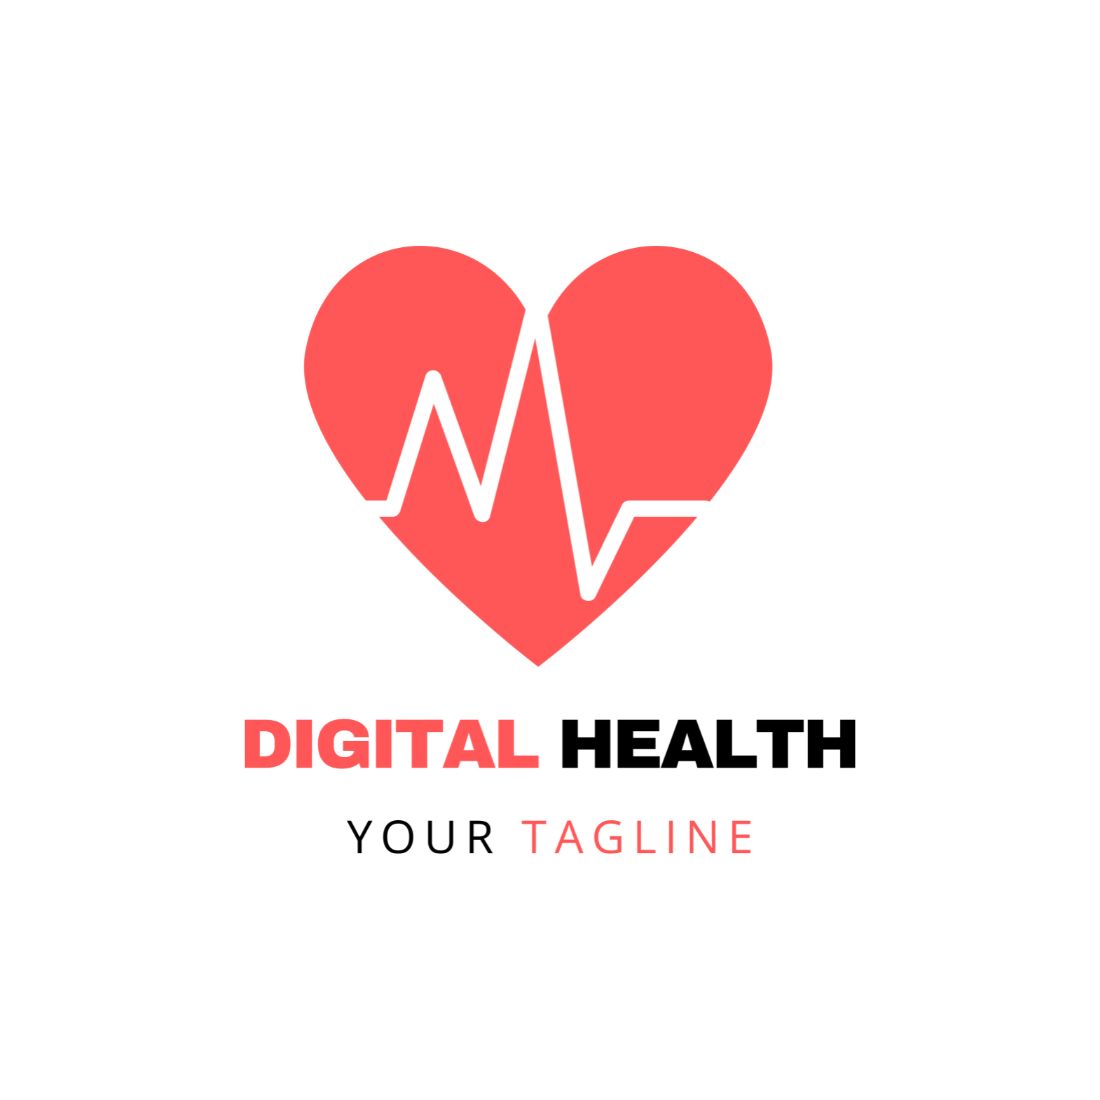 Digital Health Logo Design preview image.